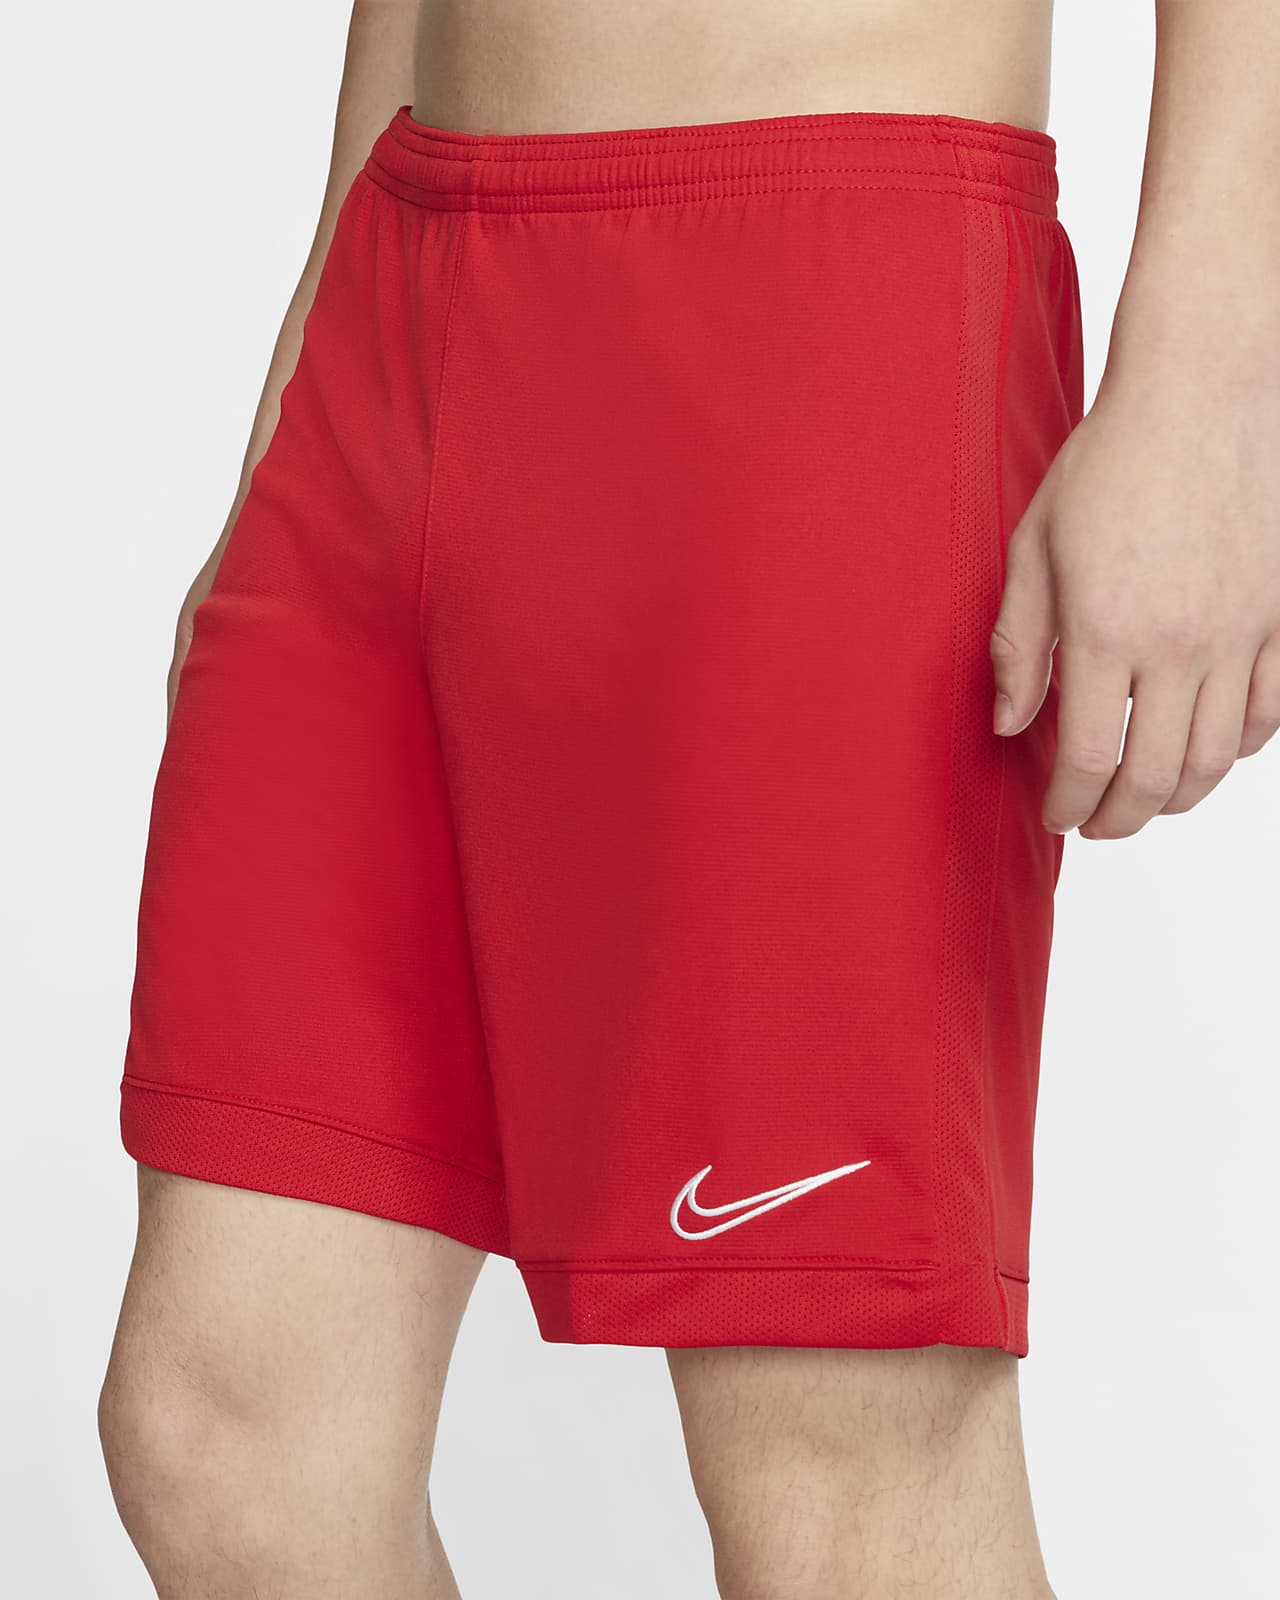 red nike football shorts